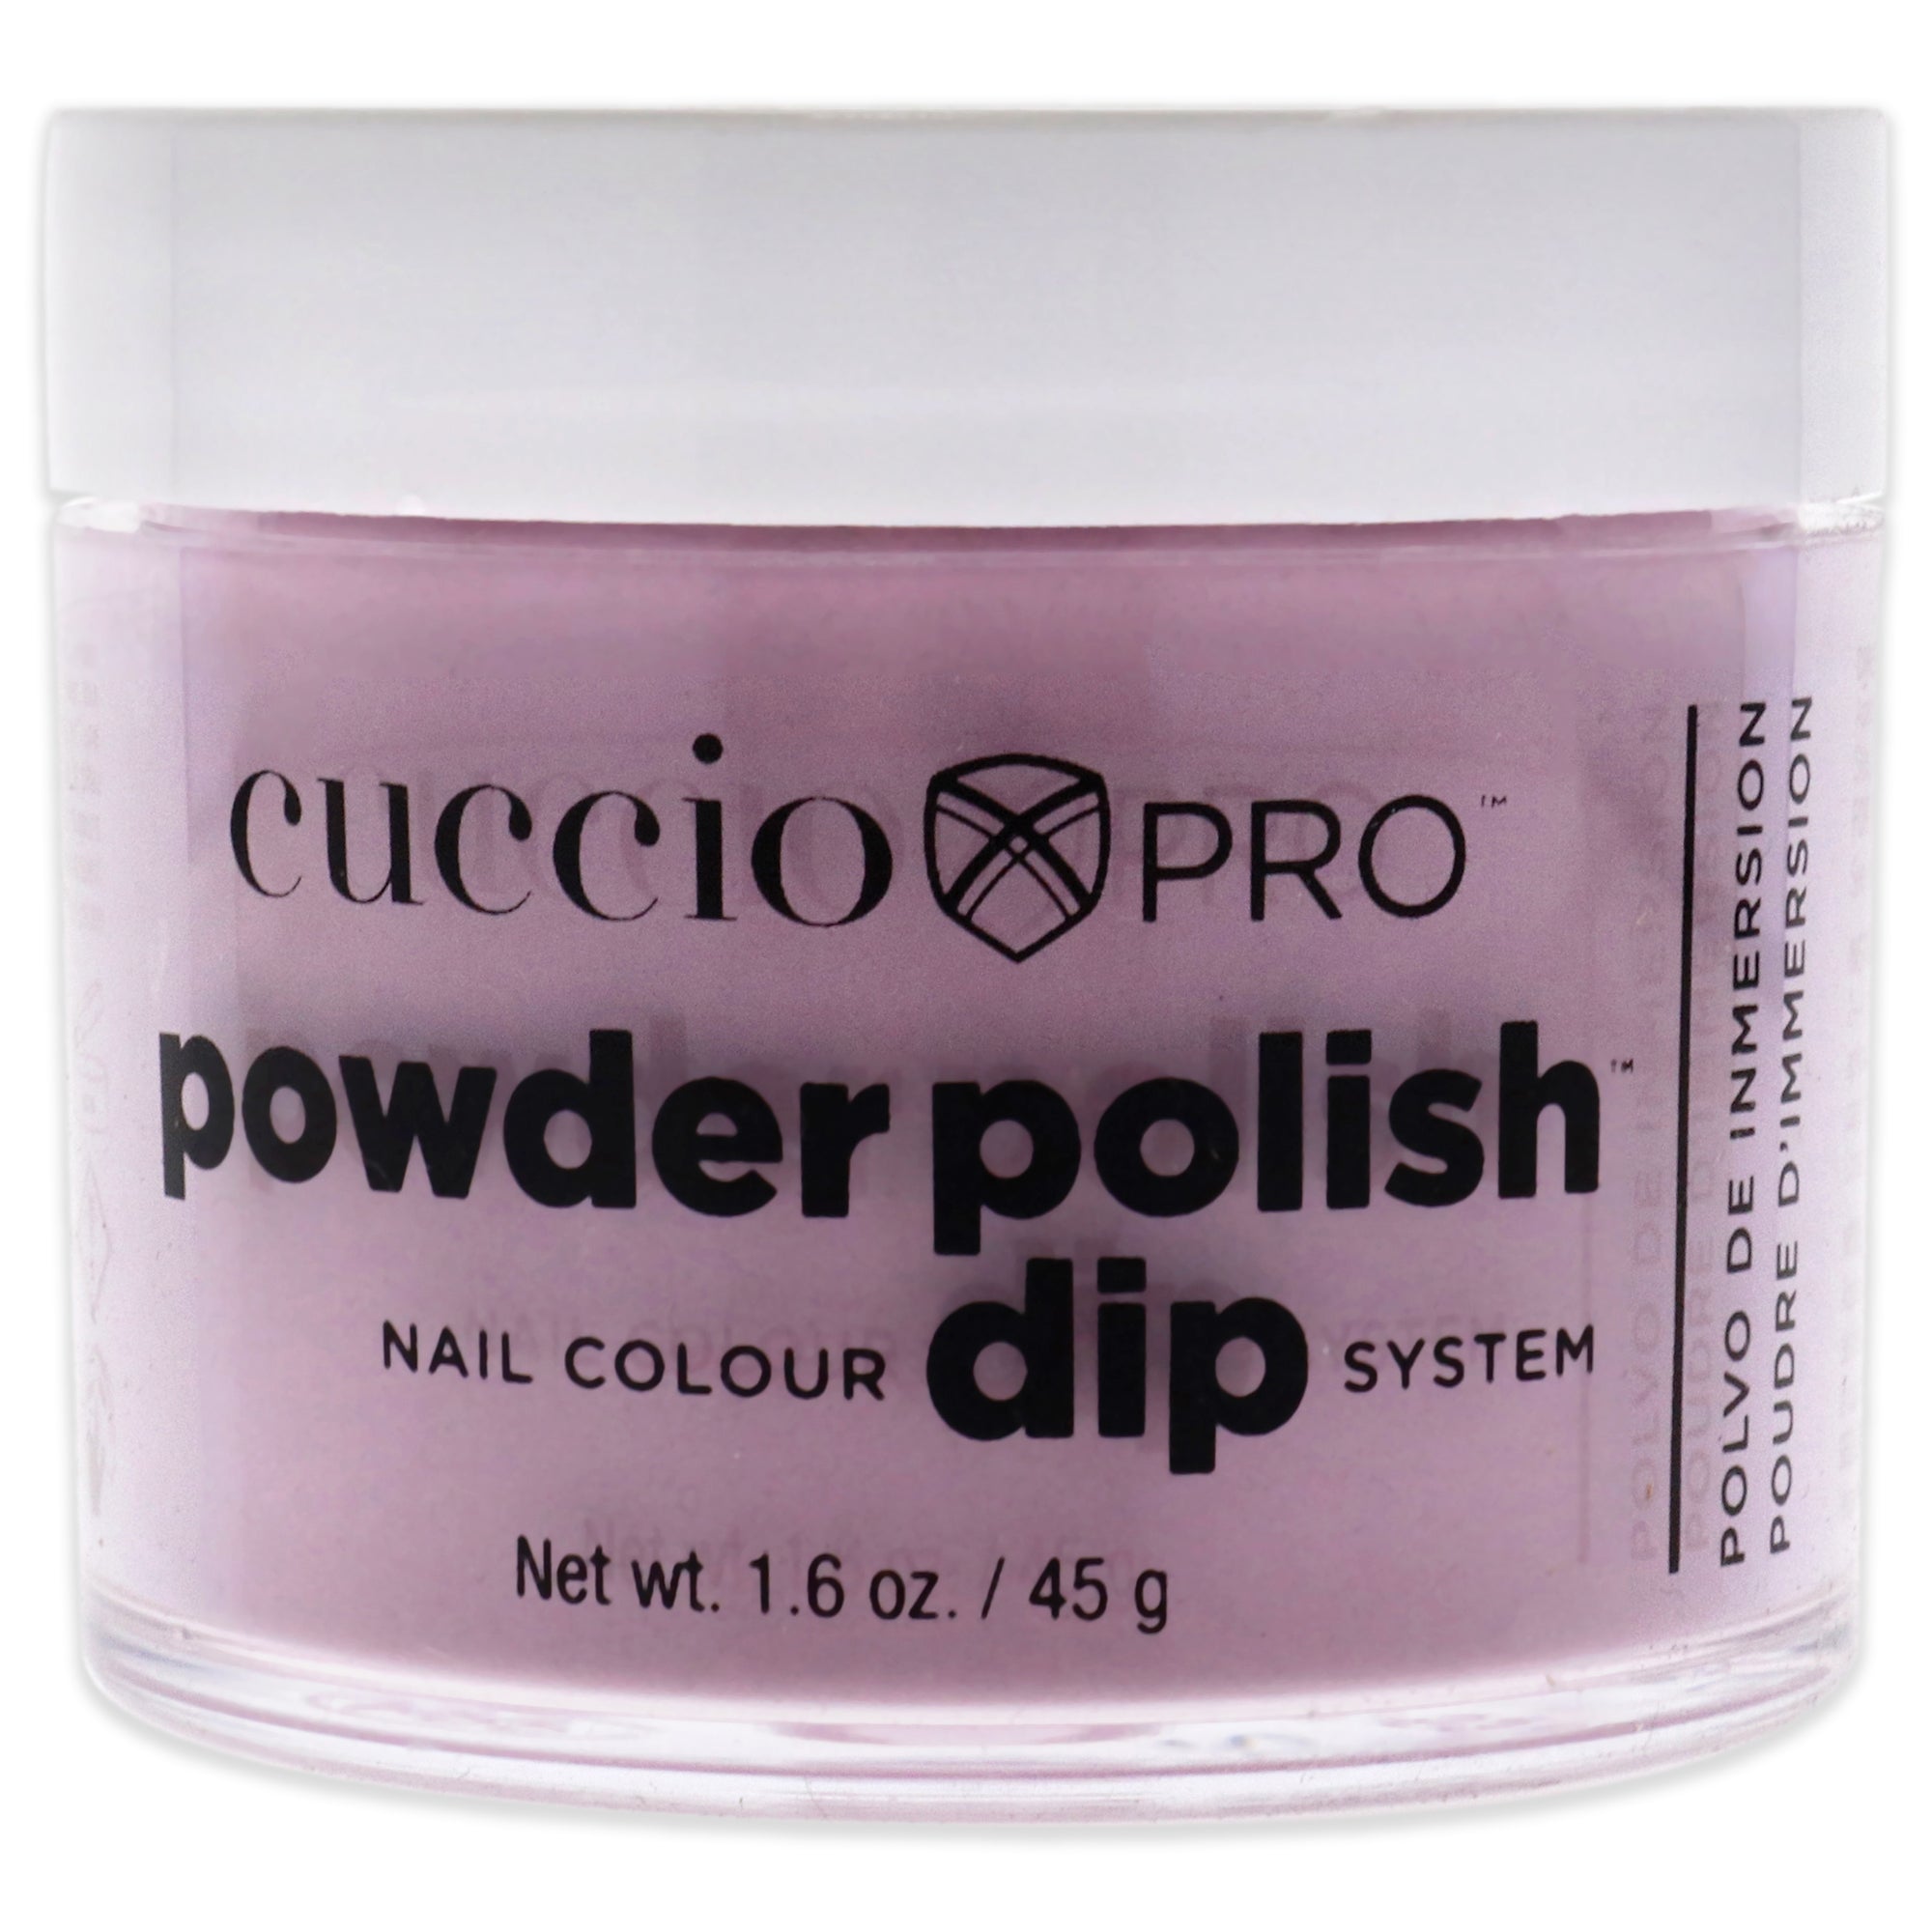 Pro Powder Polish Nail Colour Dip System - I Desire by Cuccio Colour for Women - 1.6 oz Nail Powder